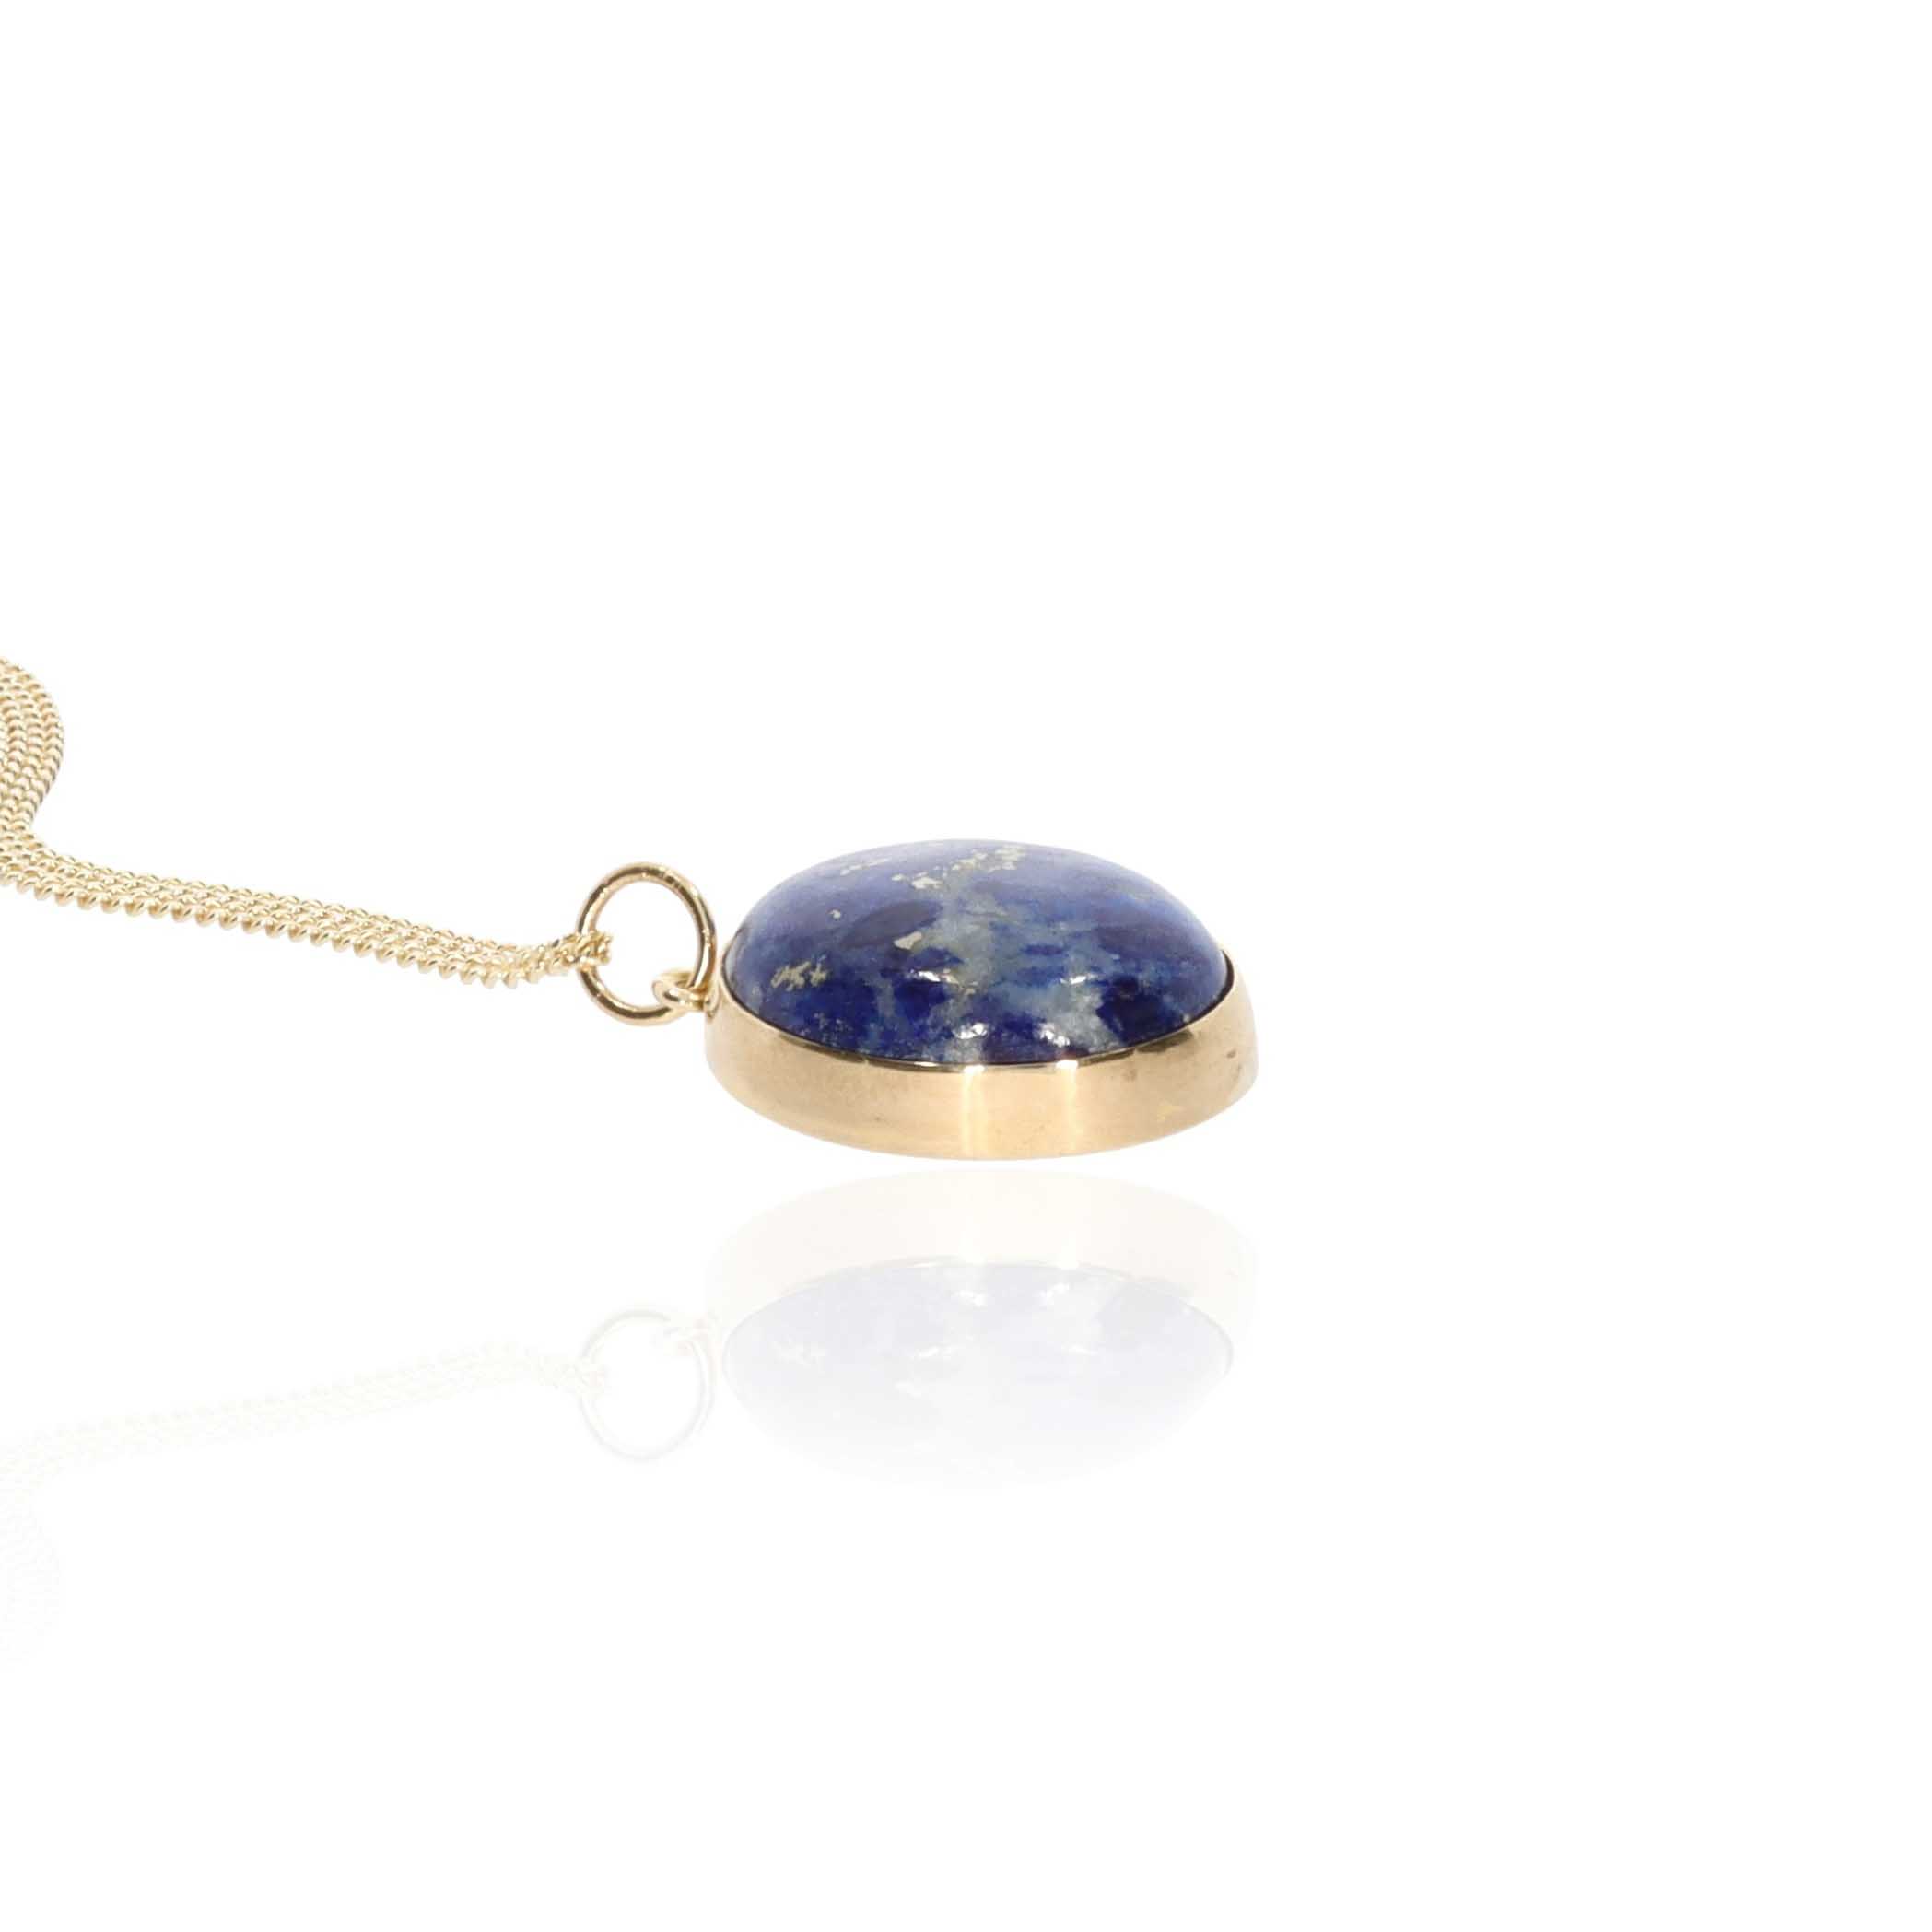 Heidi kjeldsen Jewellery Lapis Lazuli Pendant P1494 side